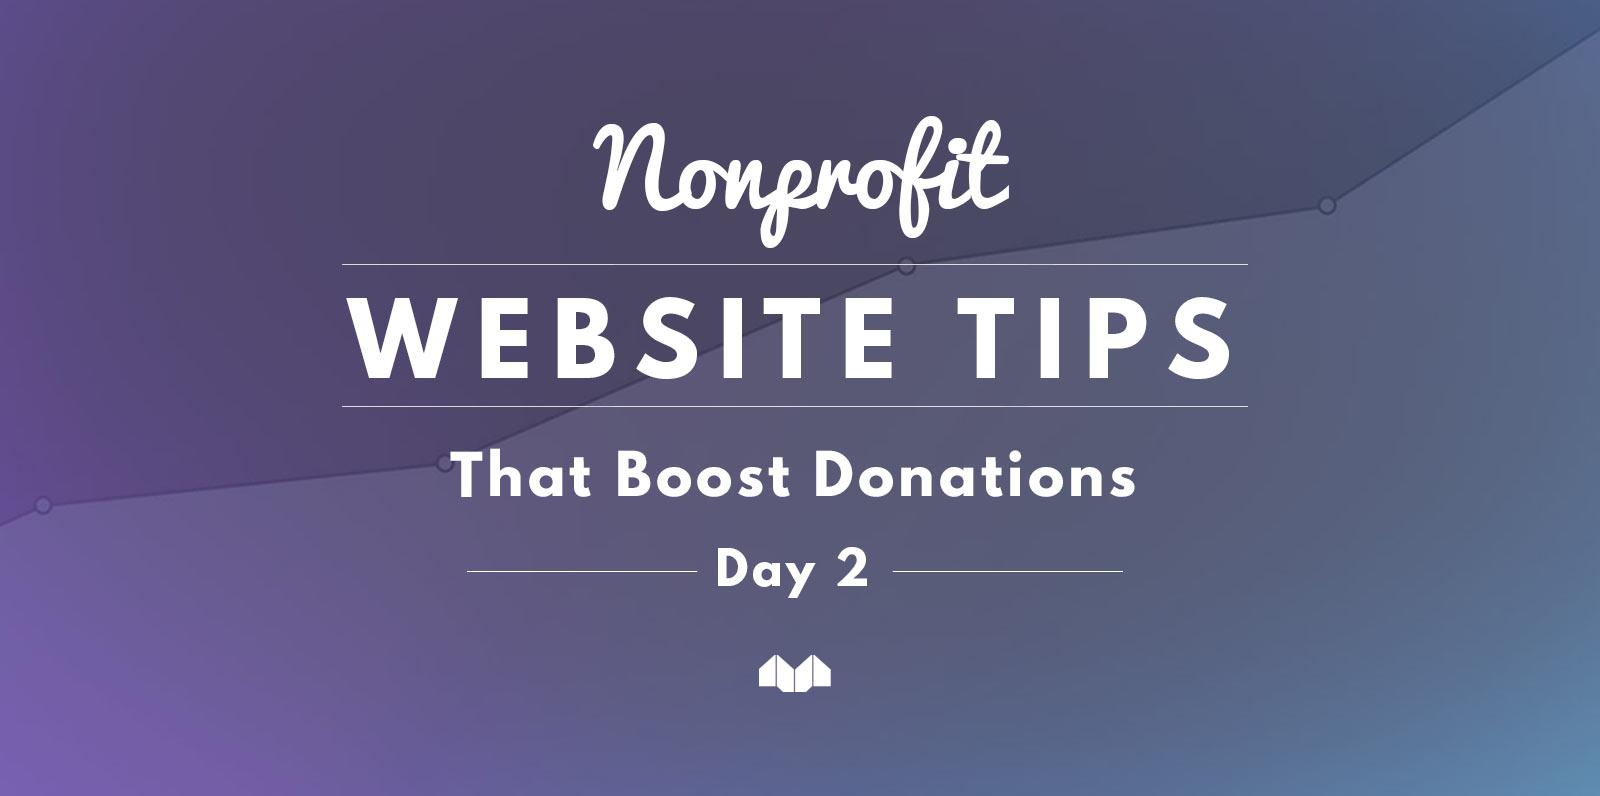 Nonprofit Website Tips